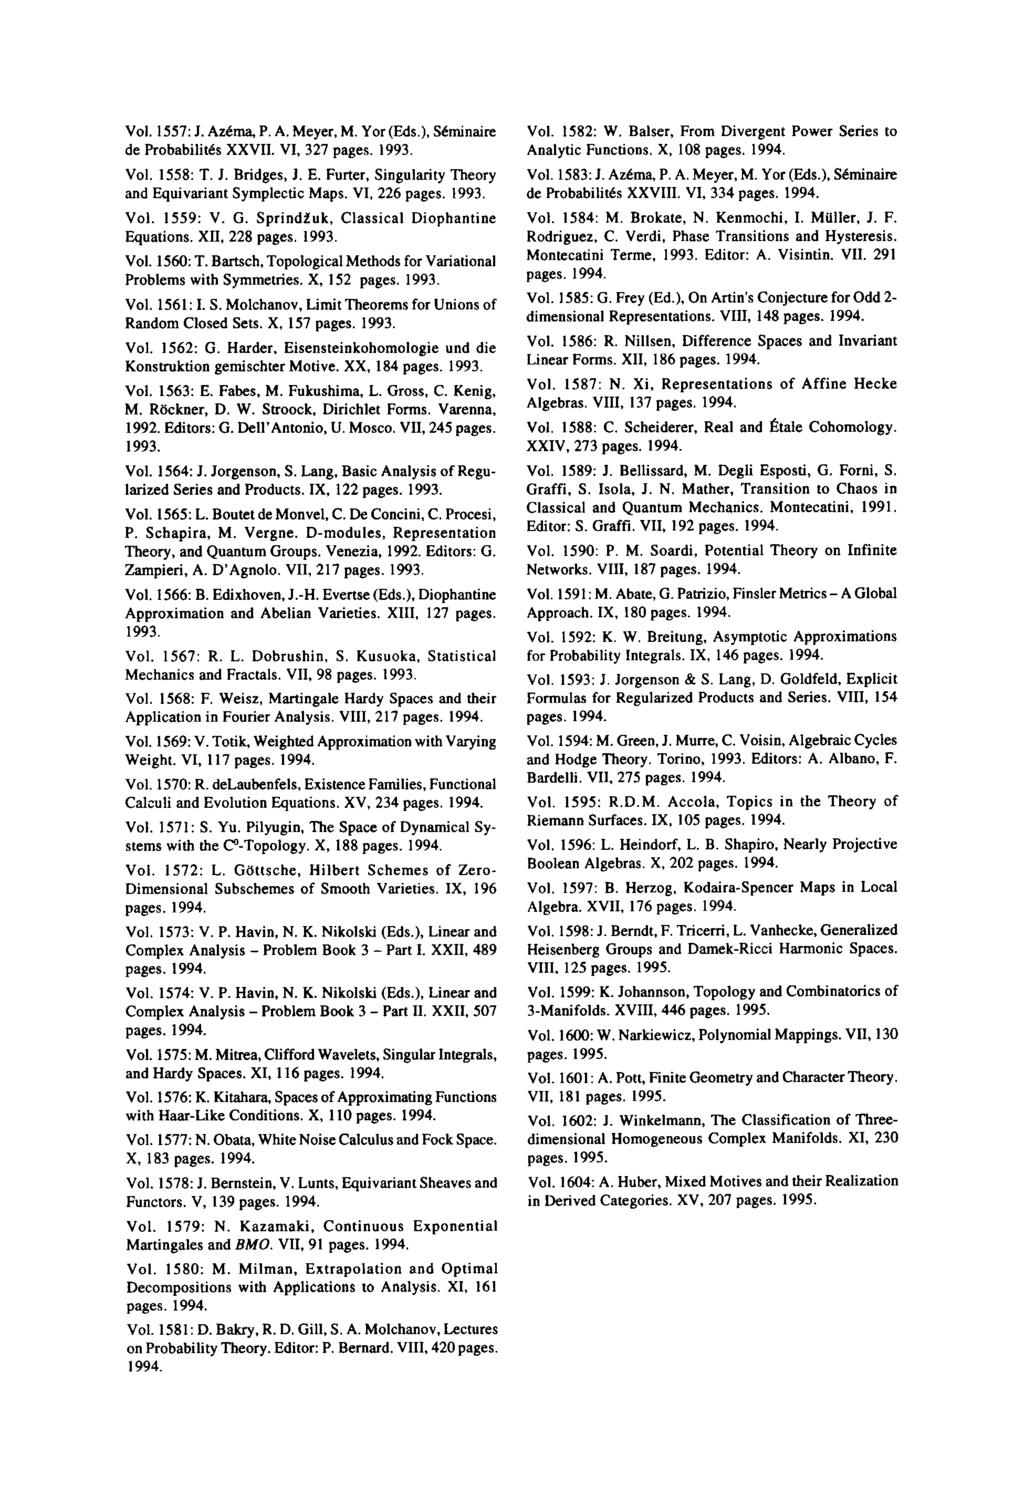 Vol. 1557:J. Azema, P. A. Meyer, M. Yor(Eds.), Seminaire de Probabilites XXVII. VI, 327 pages. 1993. Vol. 1558: T. J. Bridges, J. E. Furter, Singularity Theory and Equivariant Symplectic Maps.